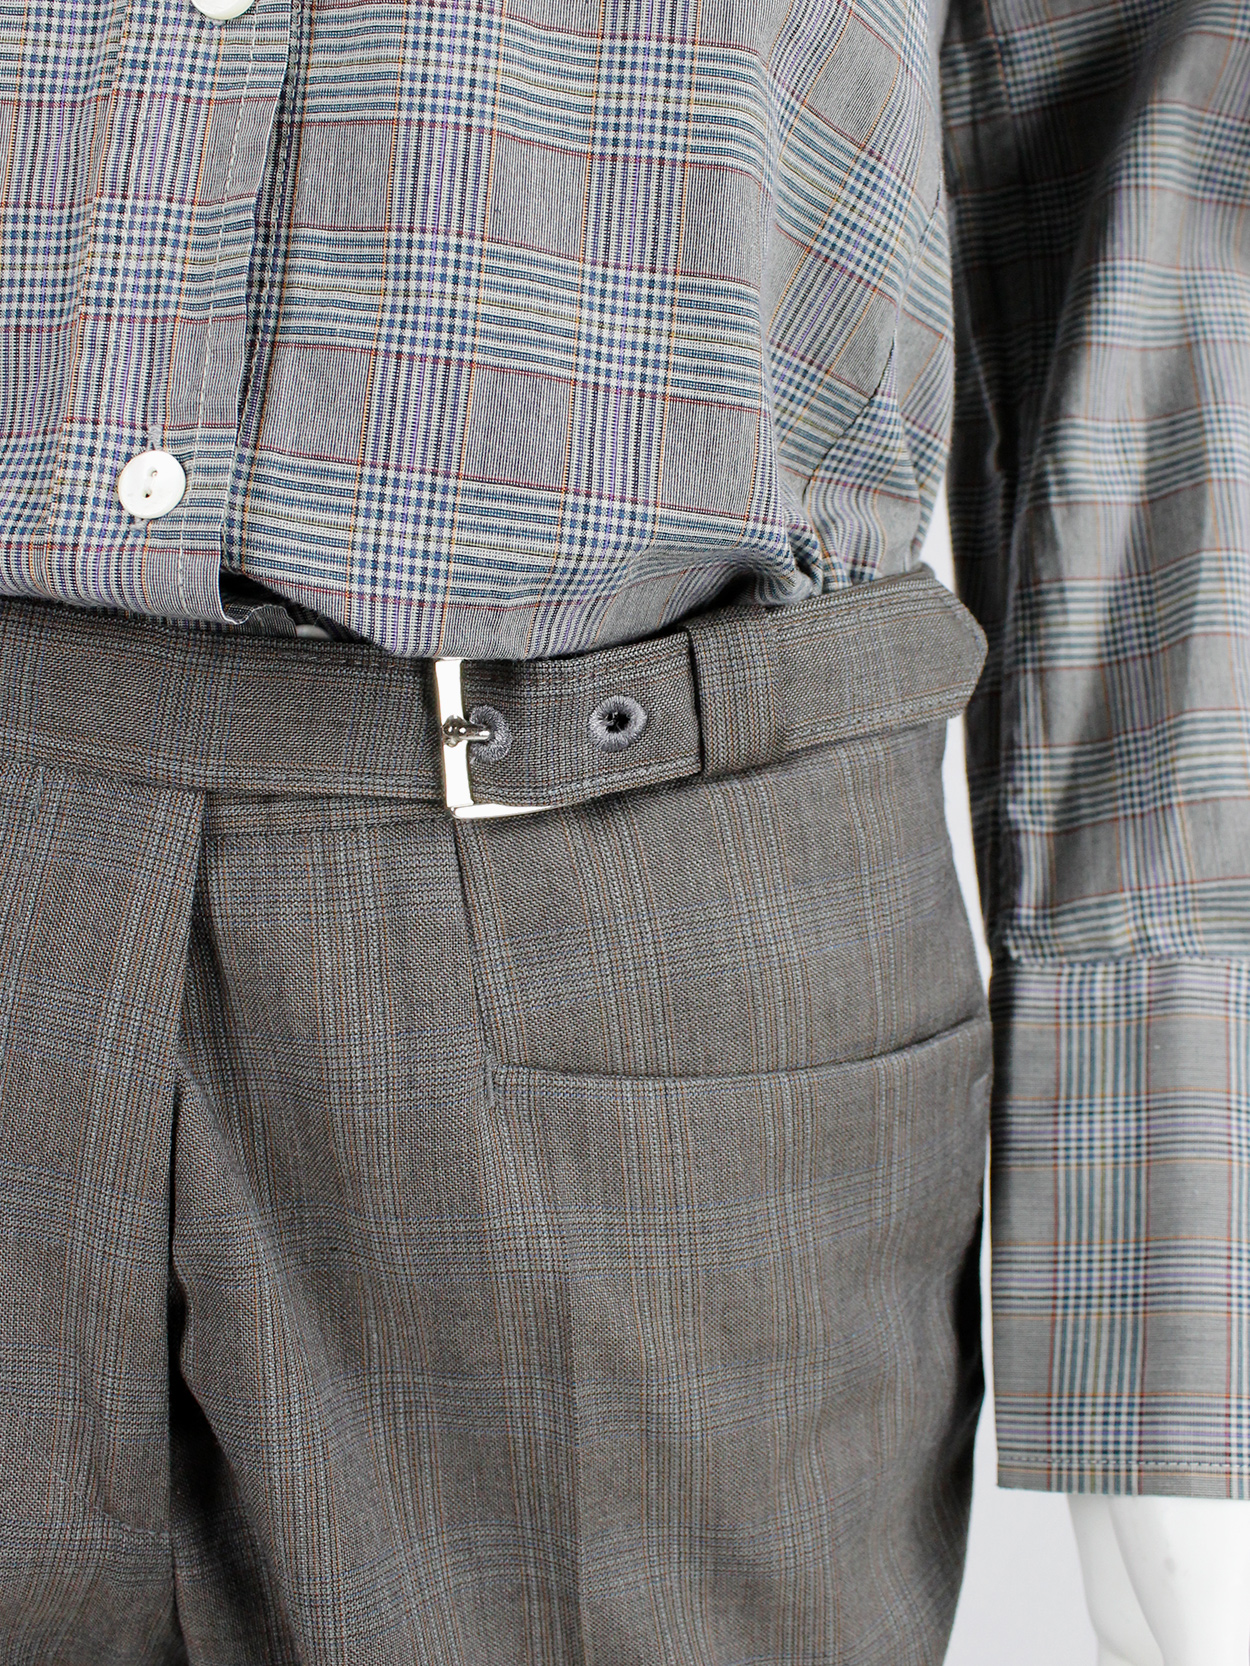 Maison Martin Margiela brown tartan trousers with side belt detail fall 2004 (9)